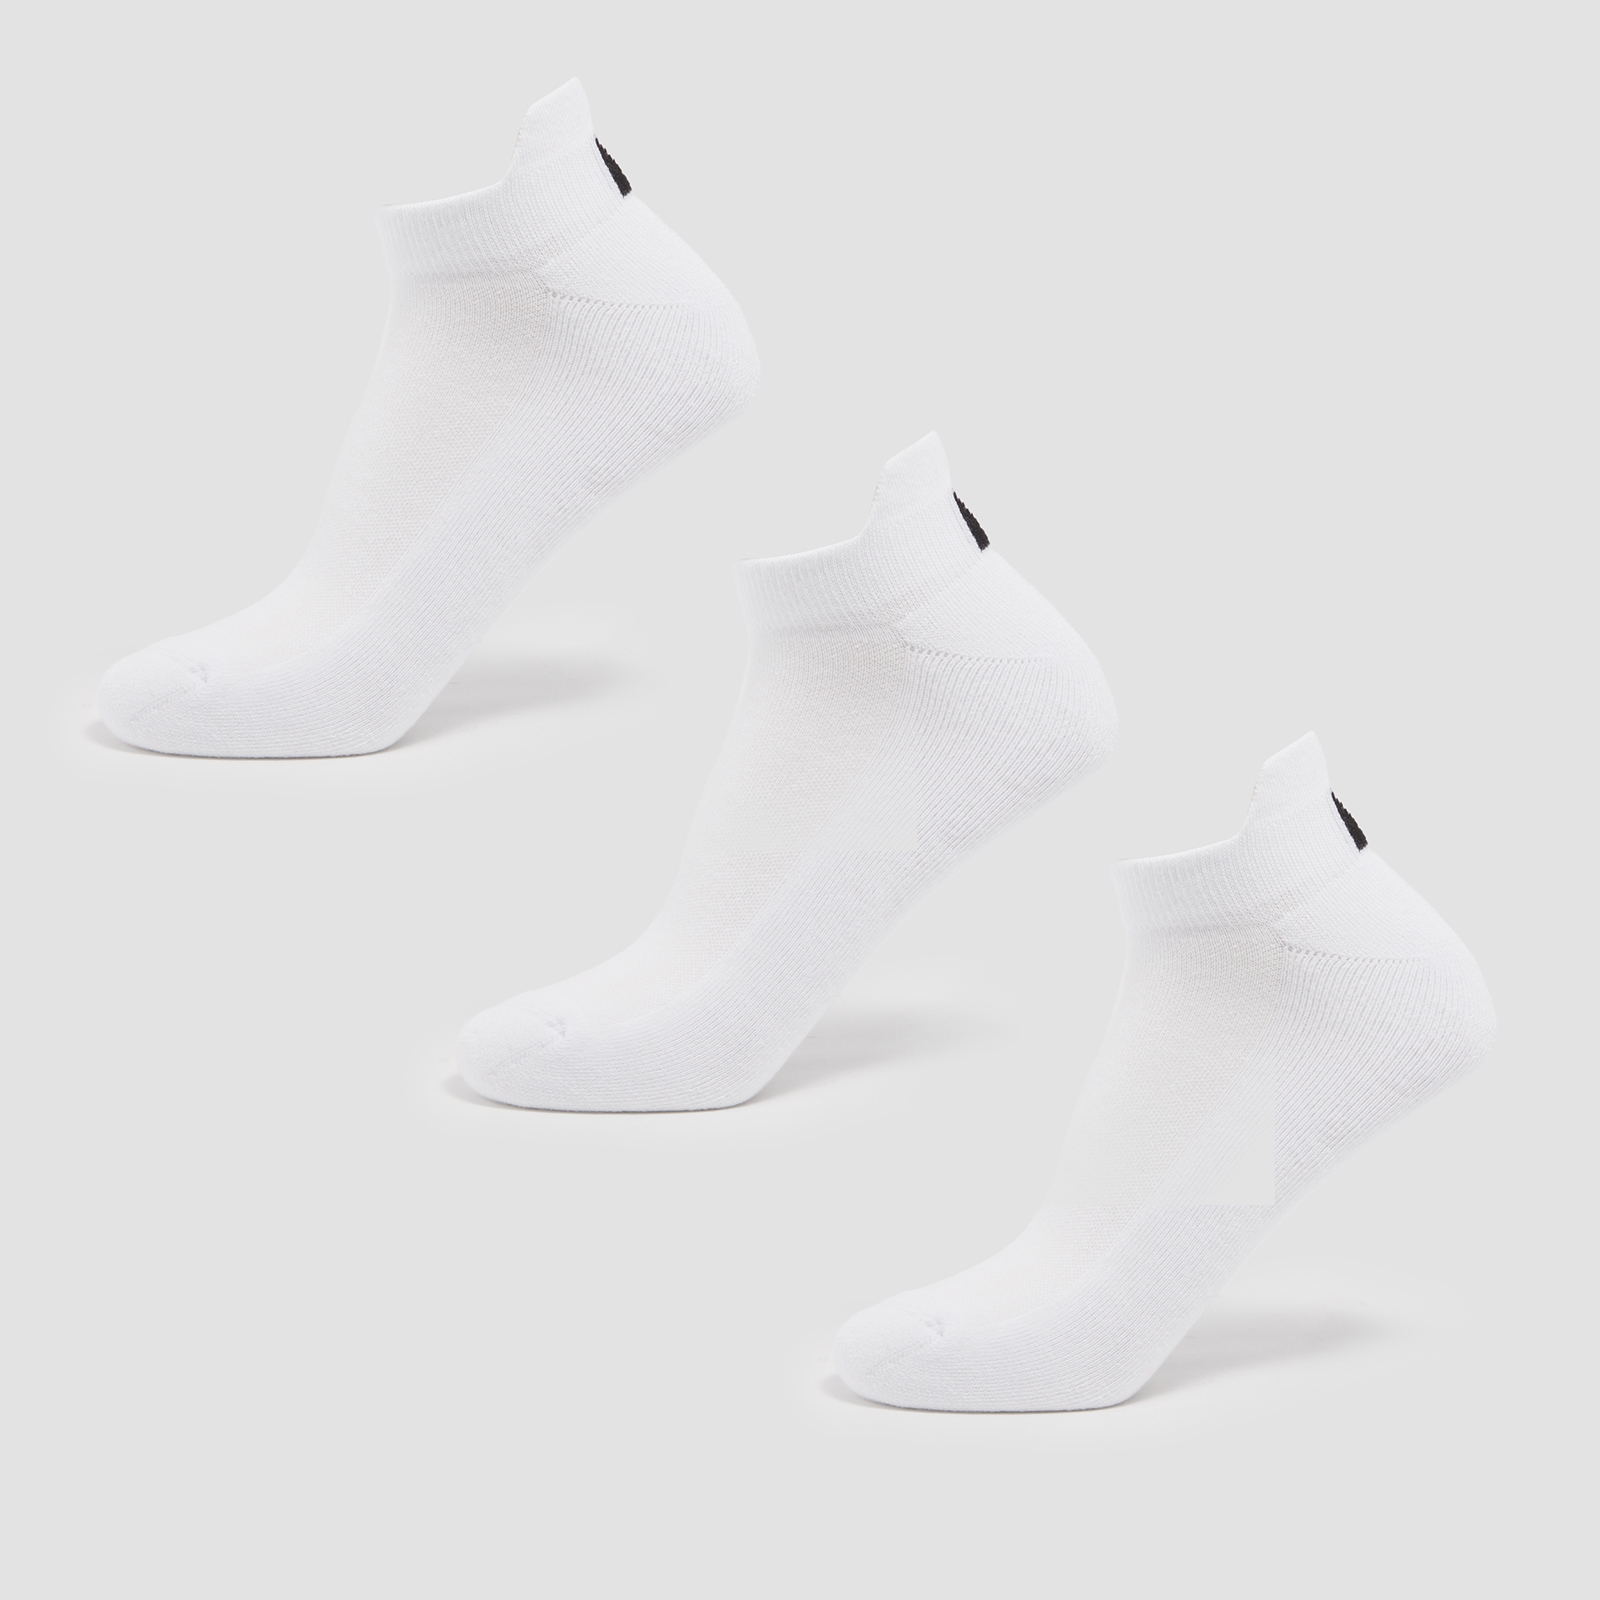 MP Unisex Trainer Socks (3 Pack) - White - UK 6-8 von MP